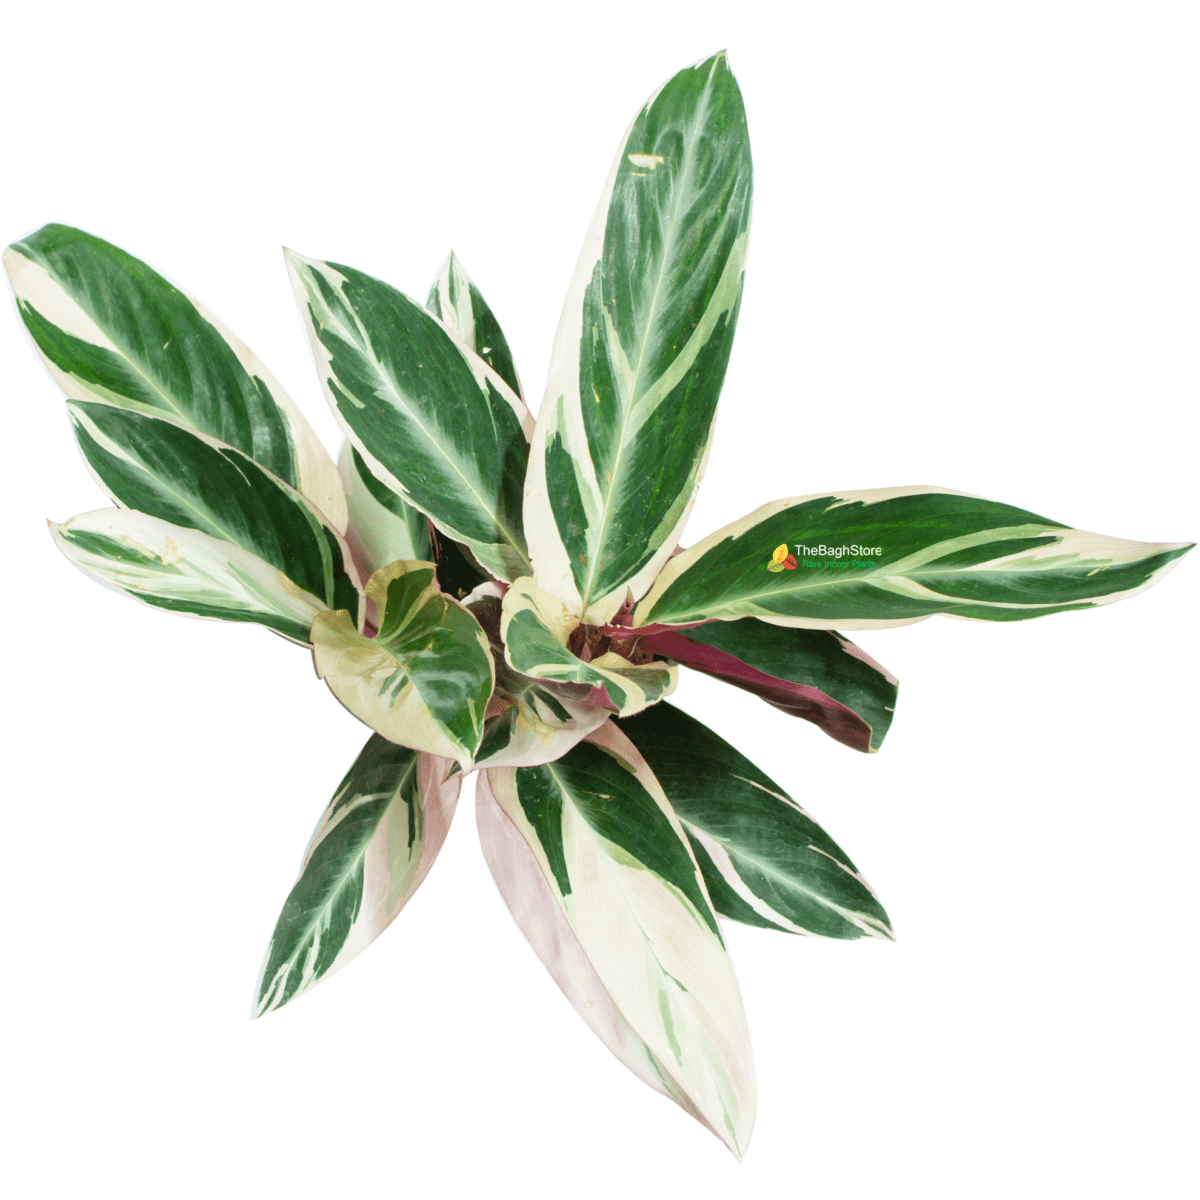 Stromanthe Sanguinea Triostar, Calathea Triostar - Plant